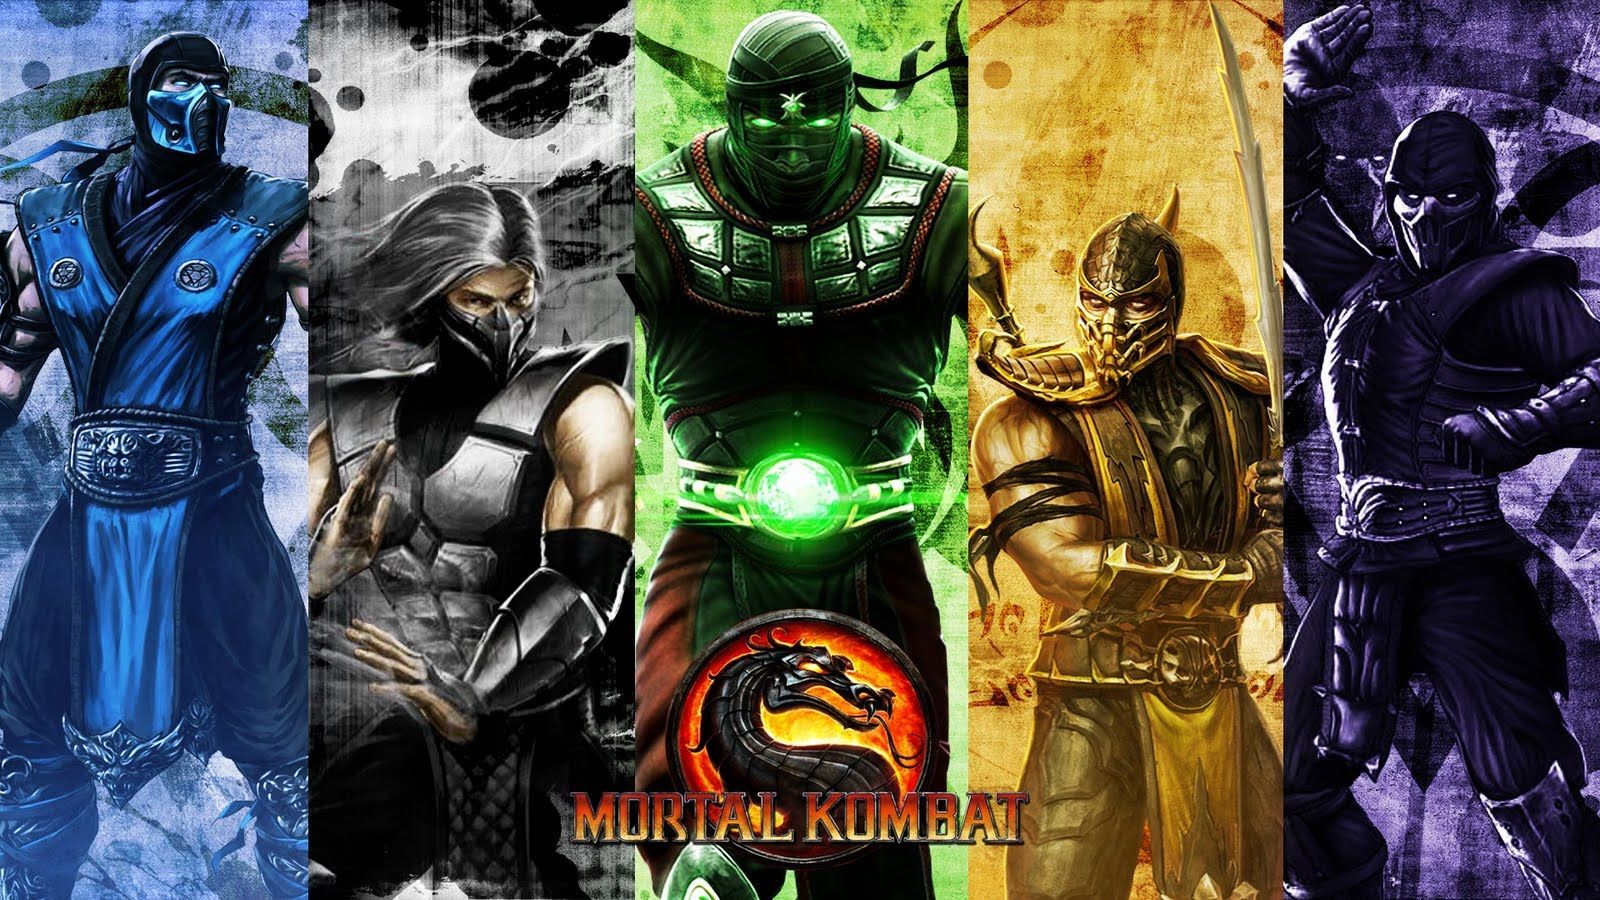 Mortal Kombat 9 Wallpaper Free Mortal Kombat 9 Background